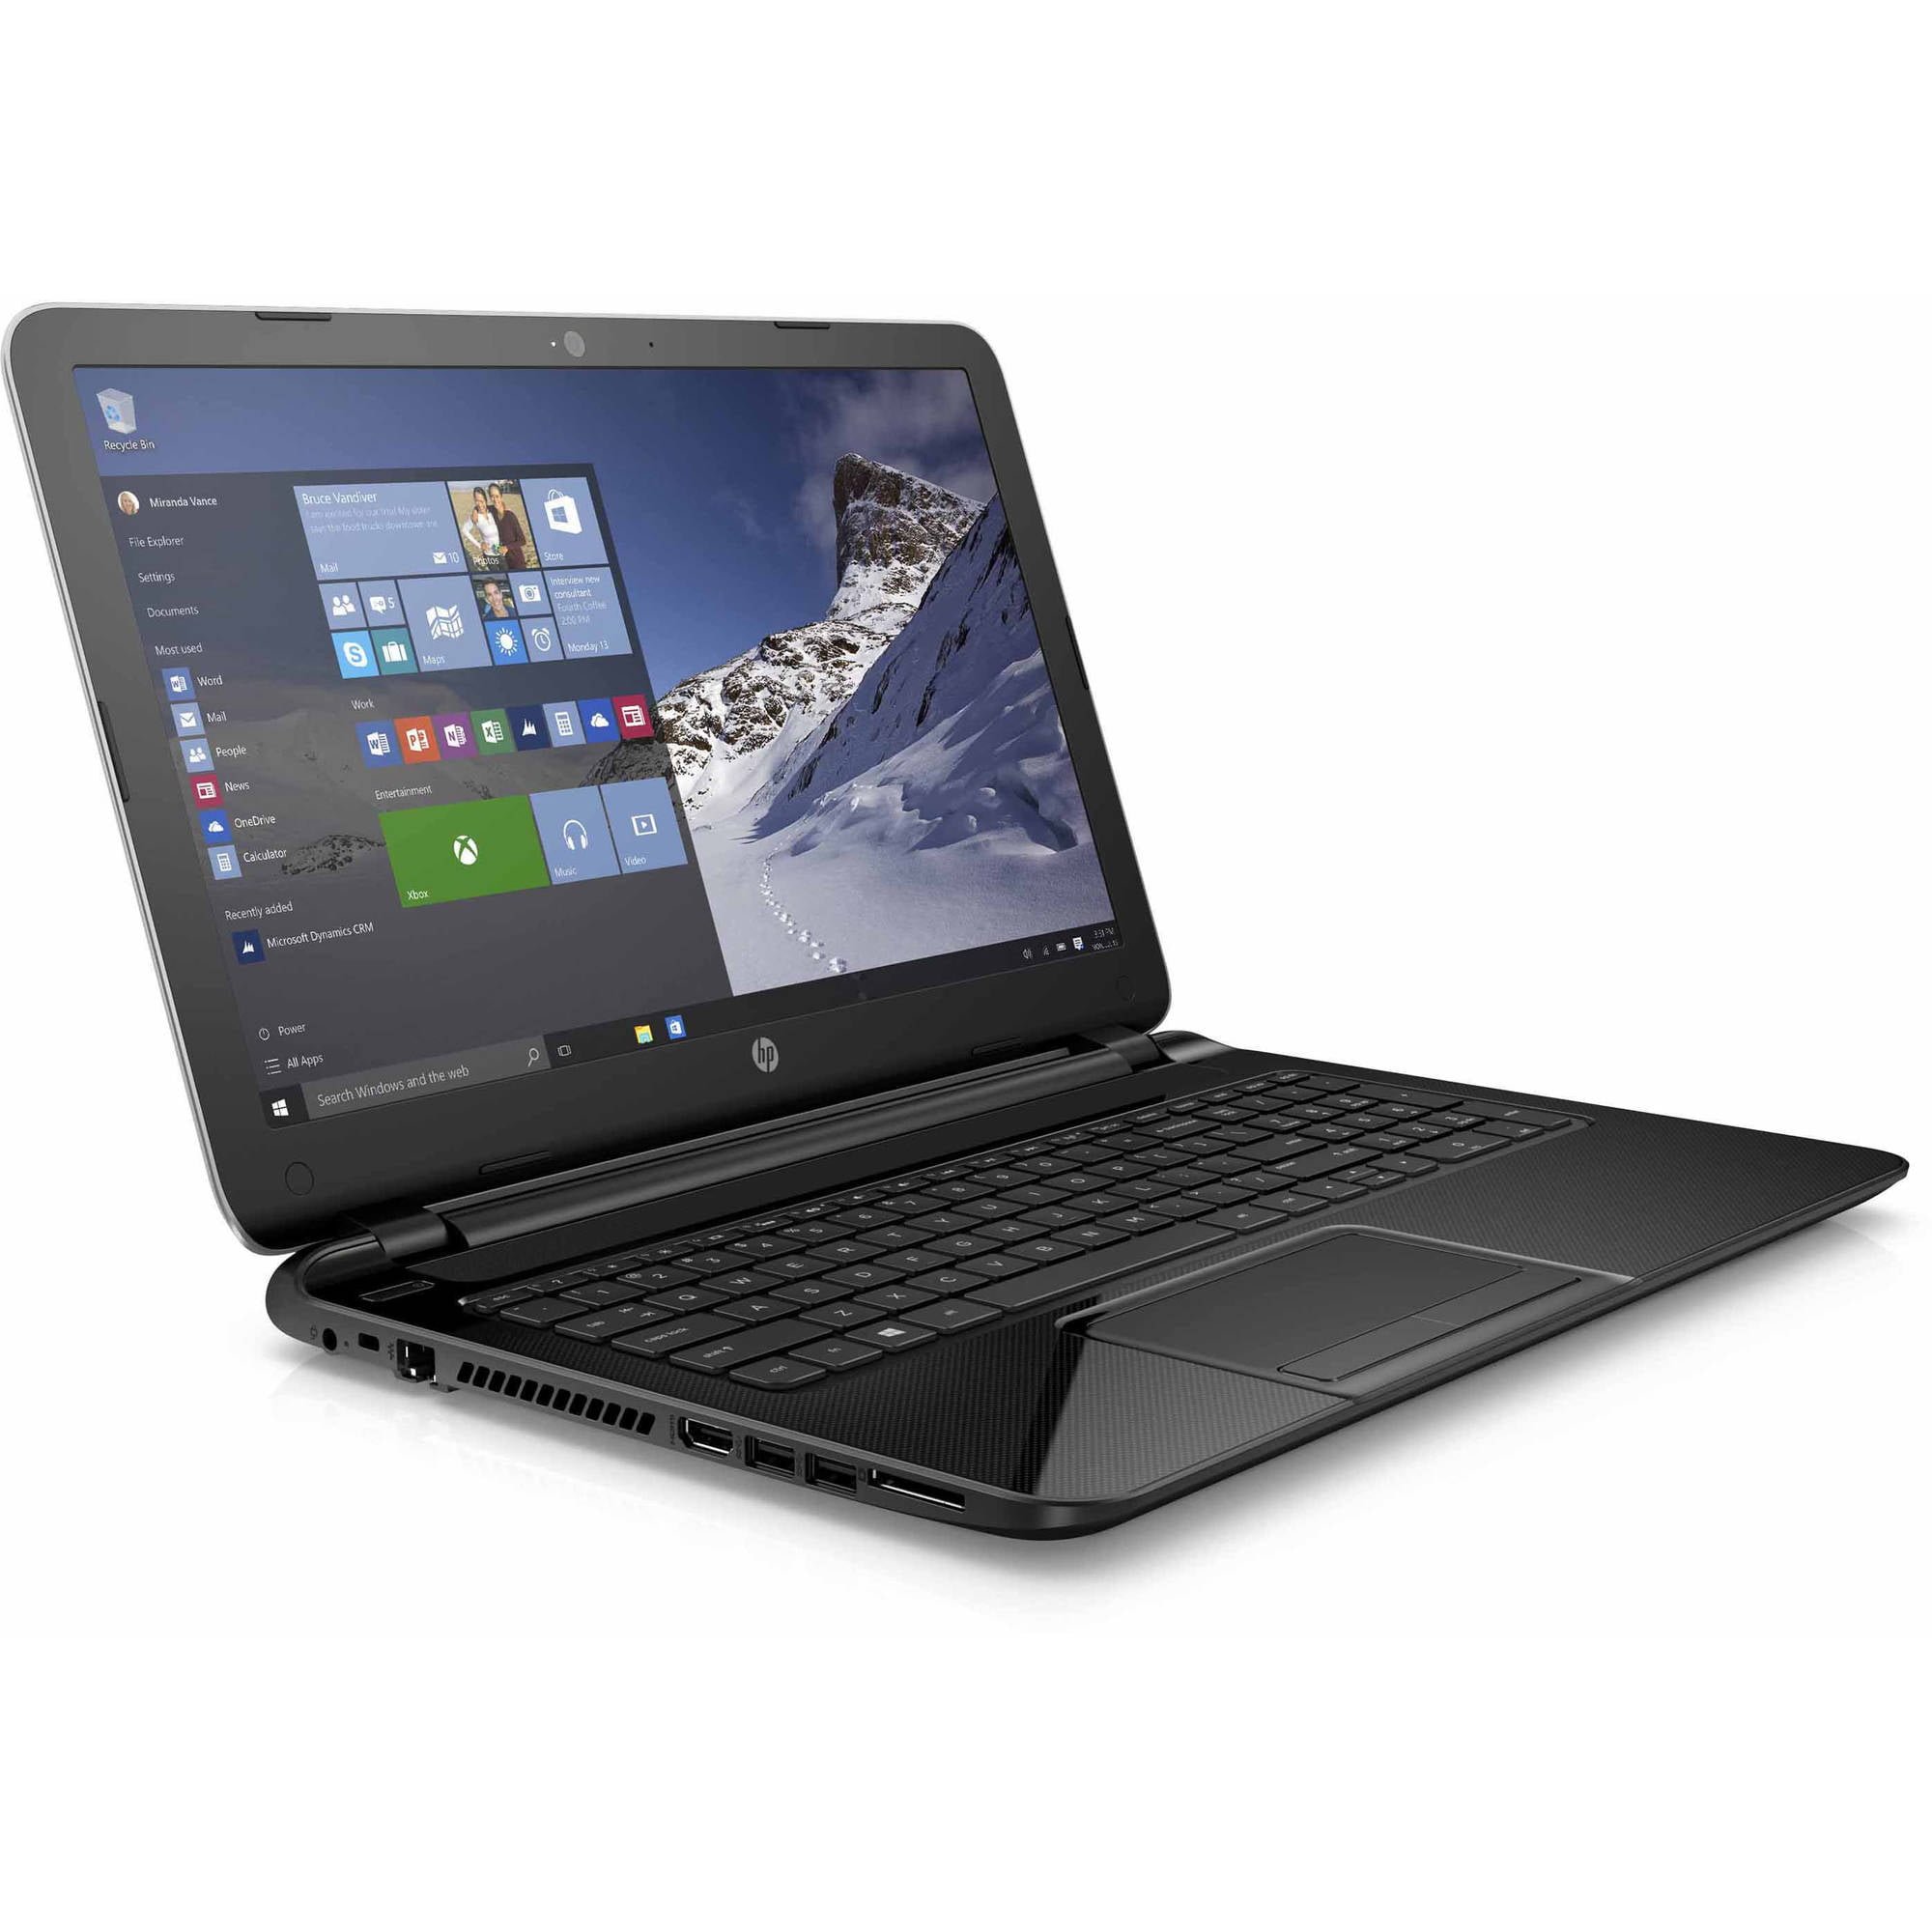 Hp Black 15 6 15 F233wm Laptop Pc With Intel Celeron N3050